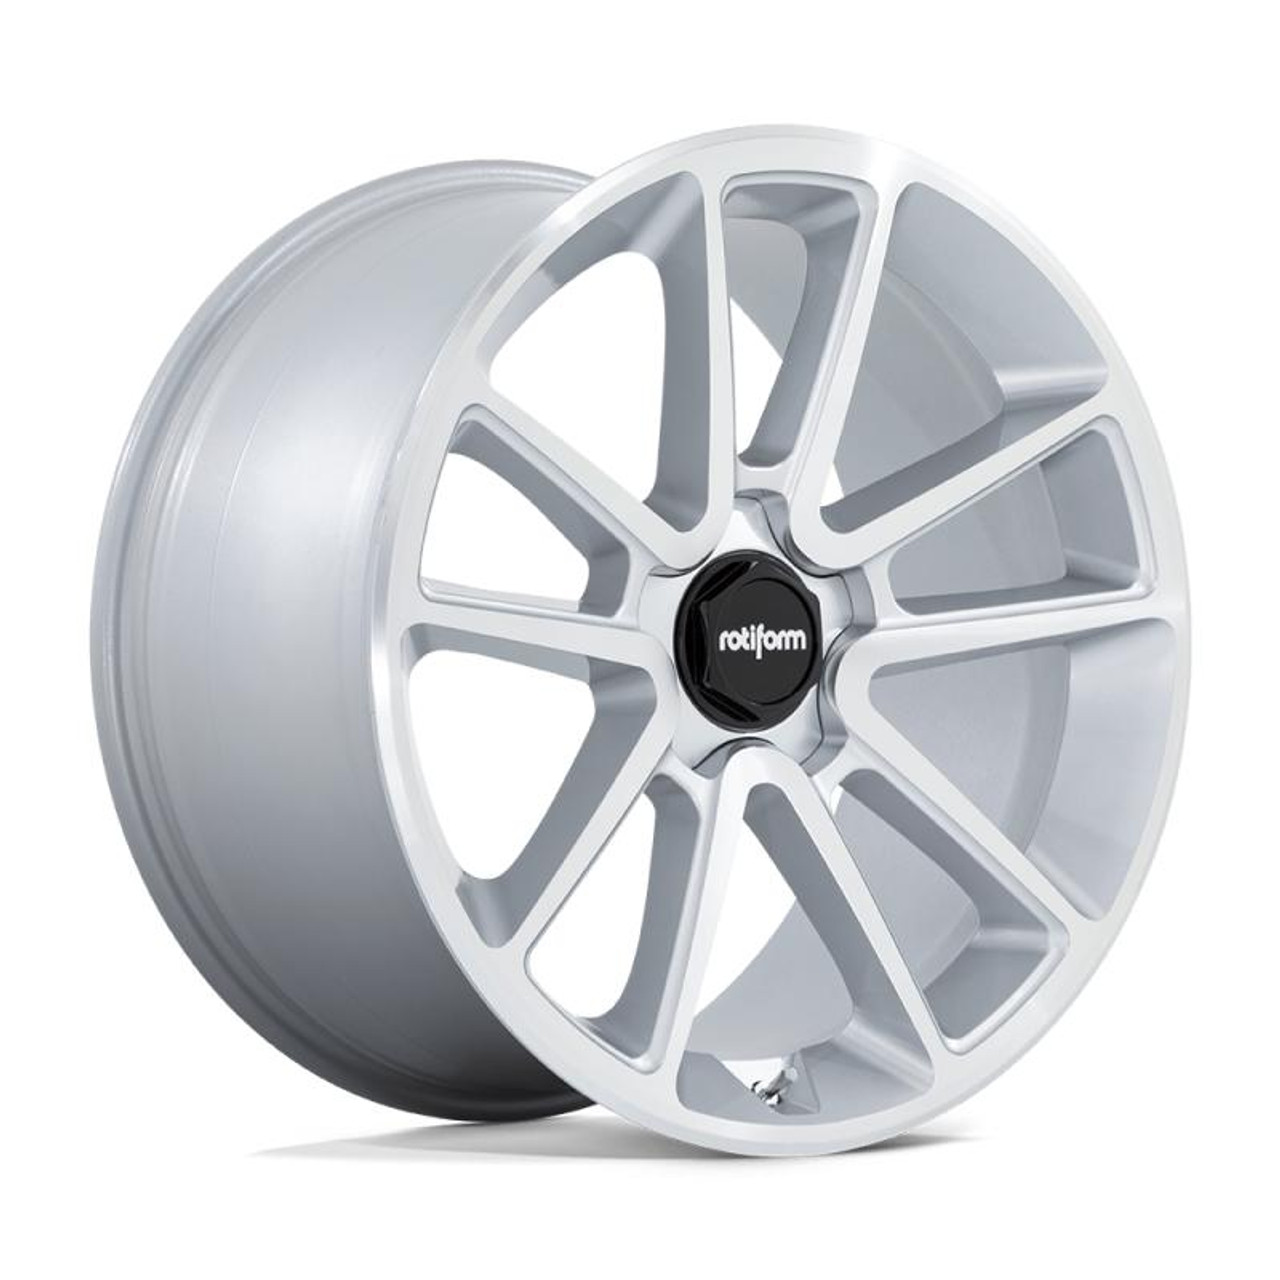  Rotiform R192 BTL Wheel 22x10 5x112 20 Offset - Gloss Silver w/ Machined Face - R192220044+20 